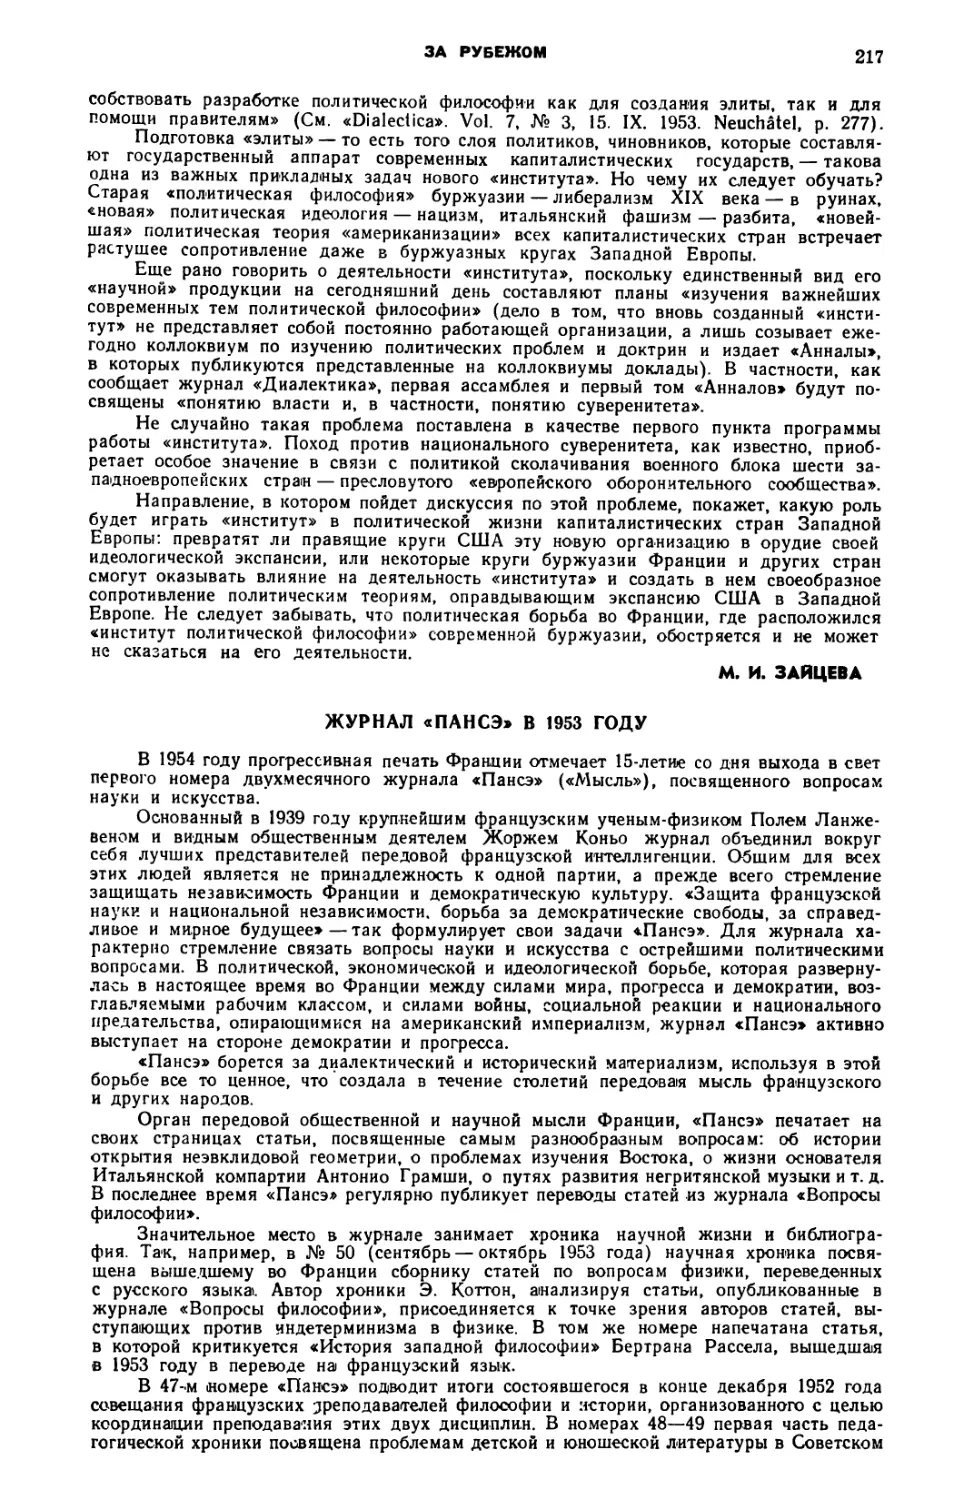 М. Н. Грецкий — Журнал «Пансэ» в 1953 году